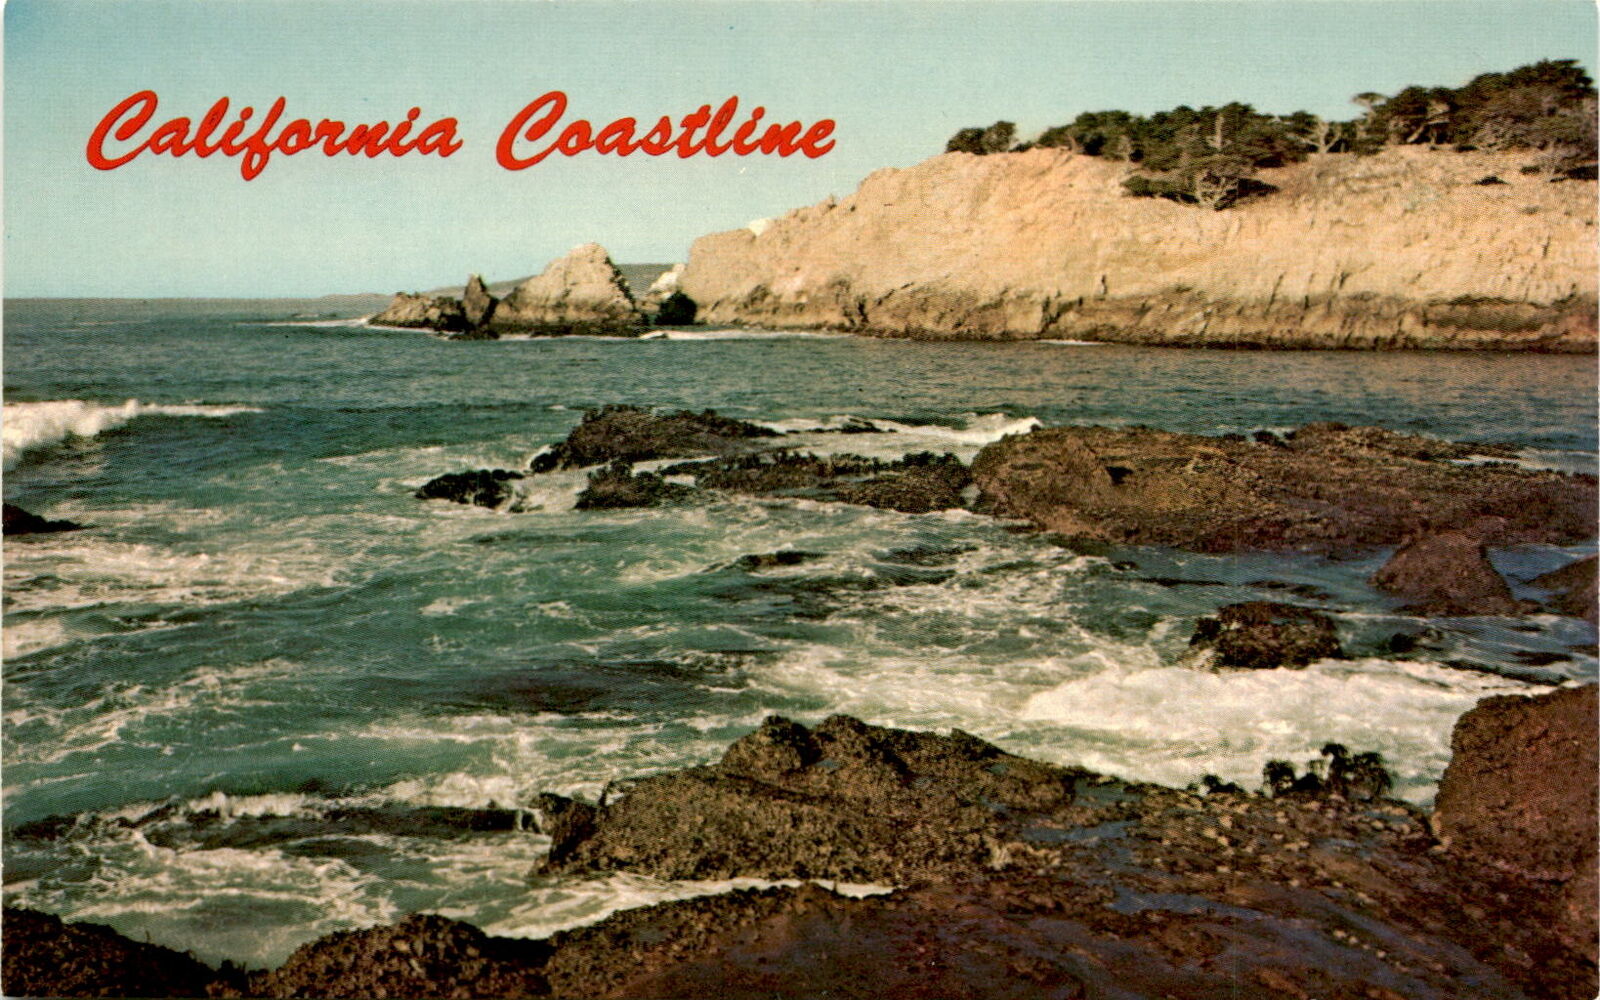 Vintage California Coastline Postcard - Stunning Ocean View